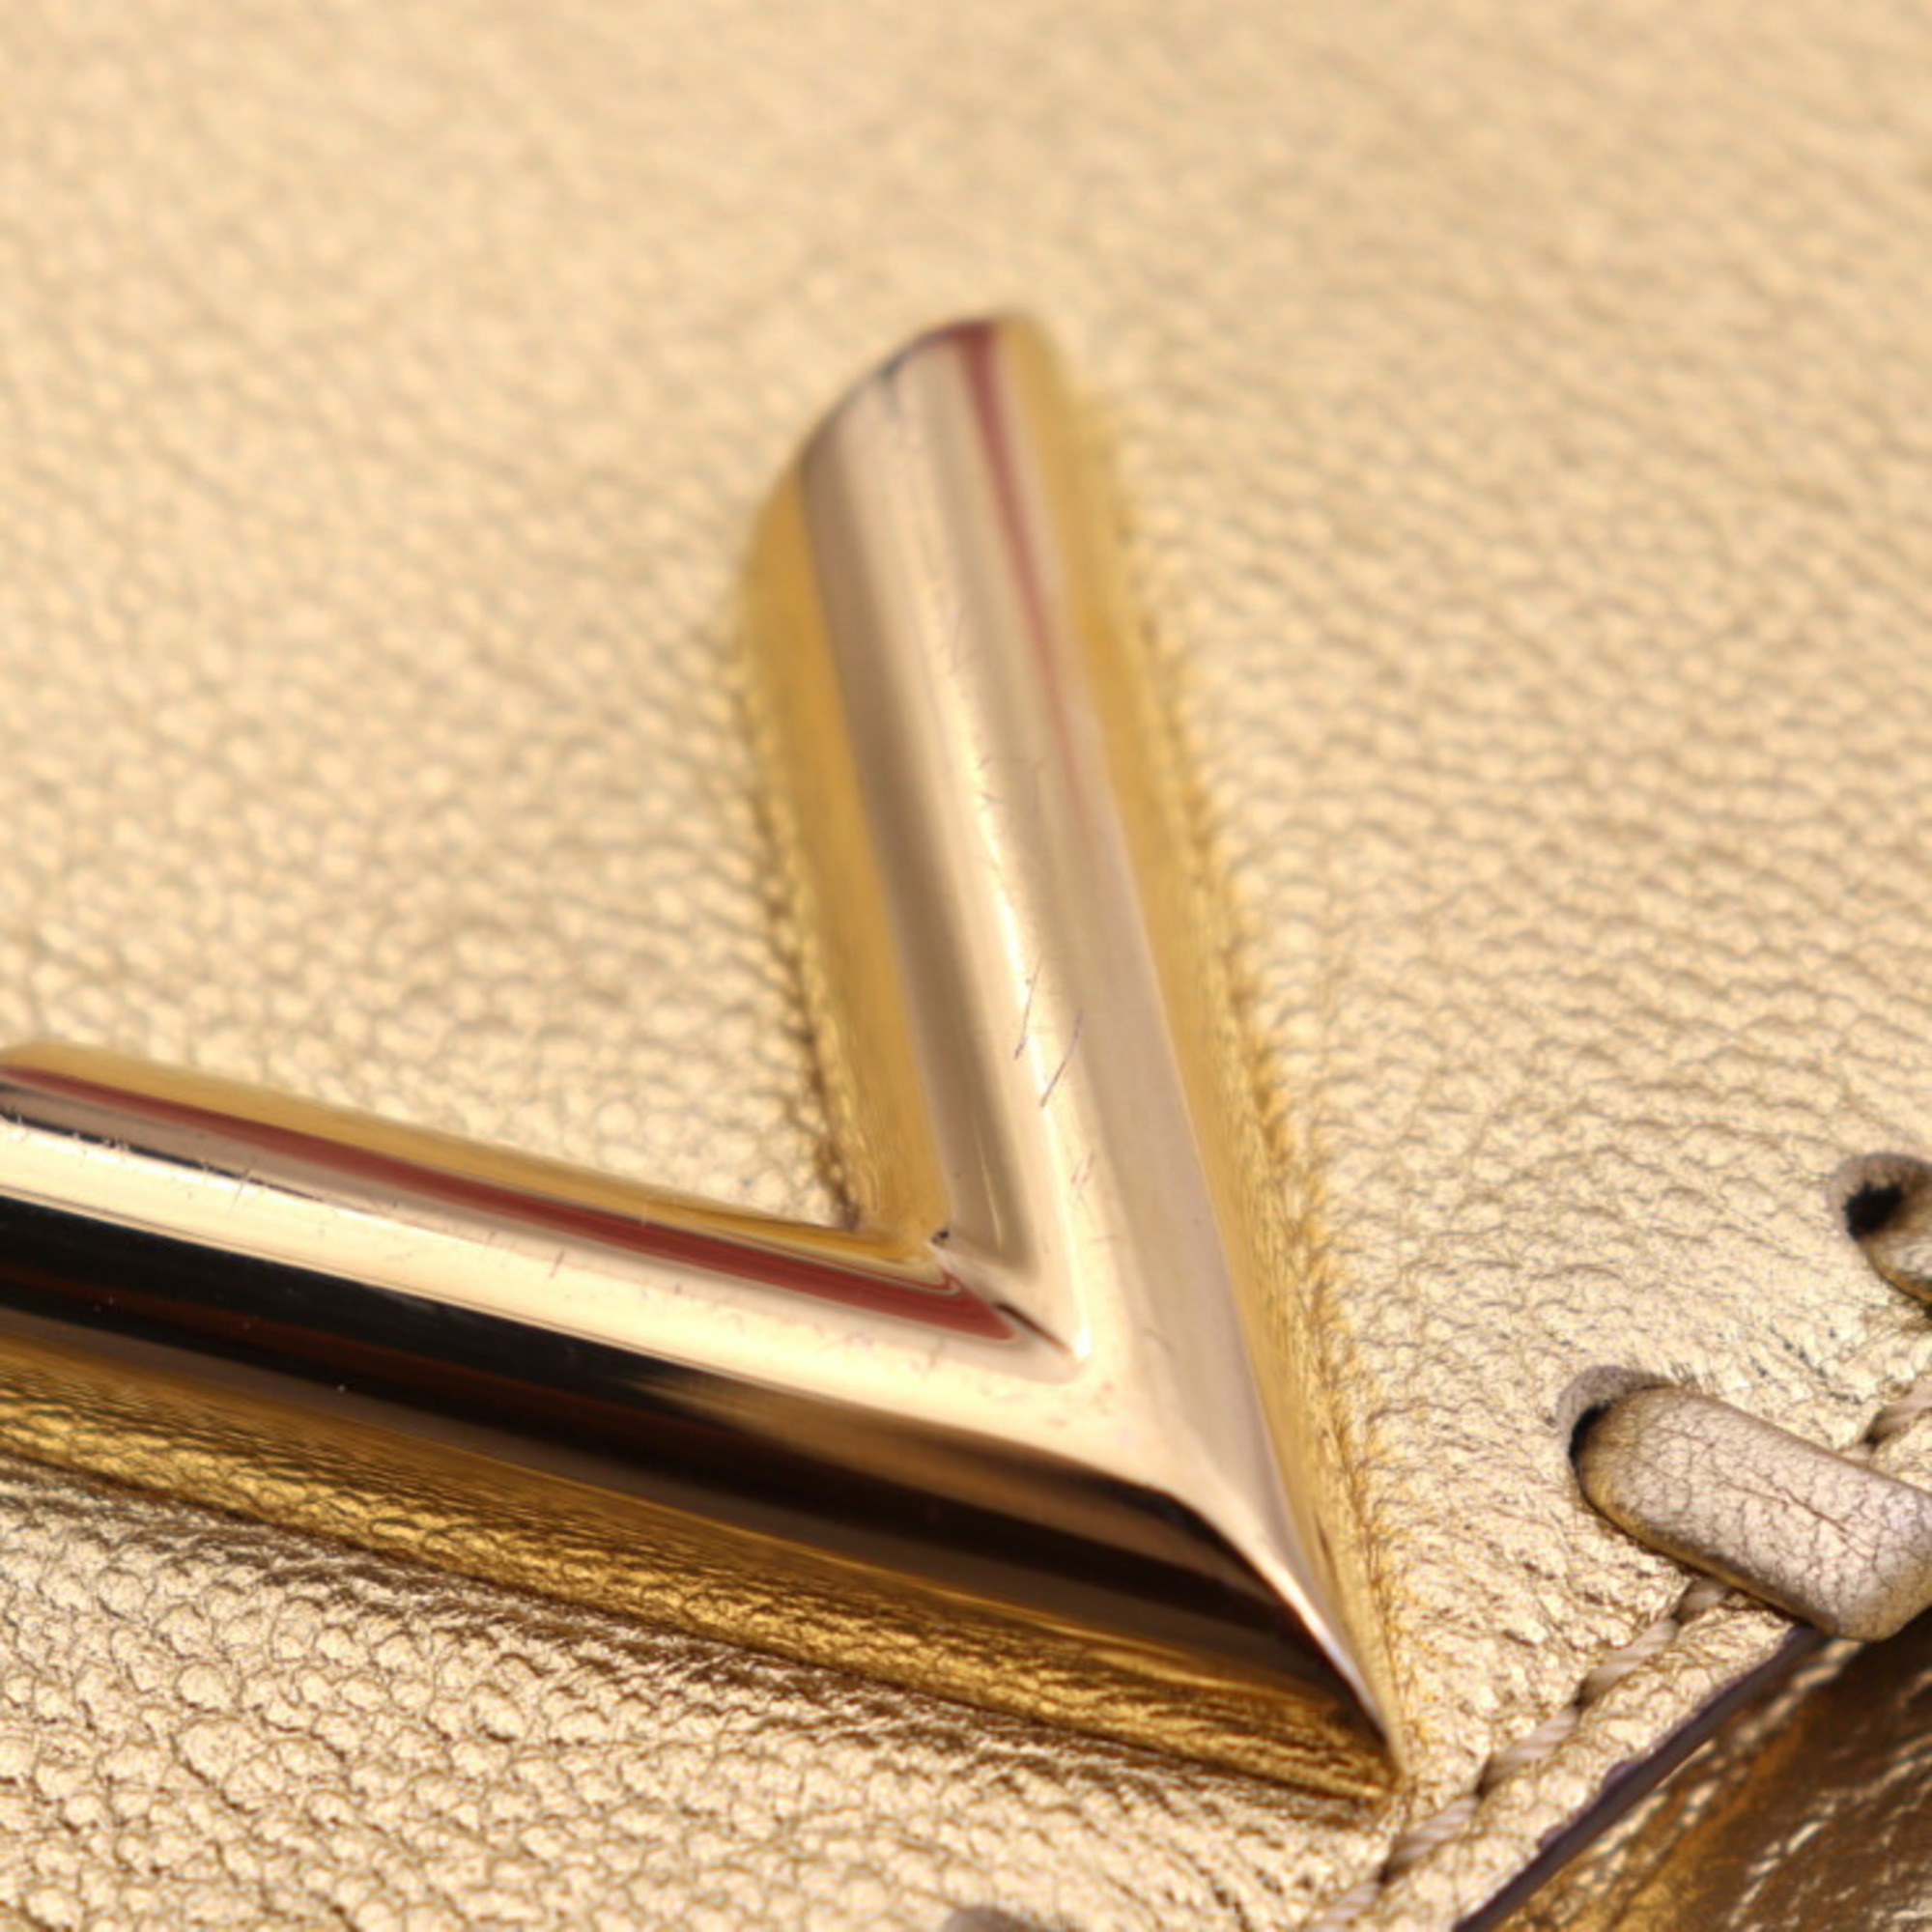 LOUIS VUITTON Louis Vuitton Very Shoulder Bag M43202 Calf Leather Gold Chain Handbag Star Studs